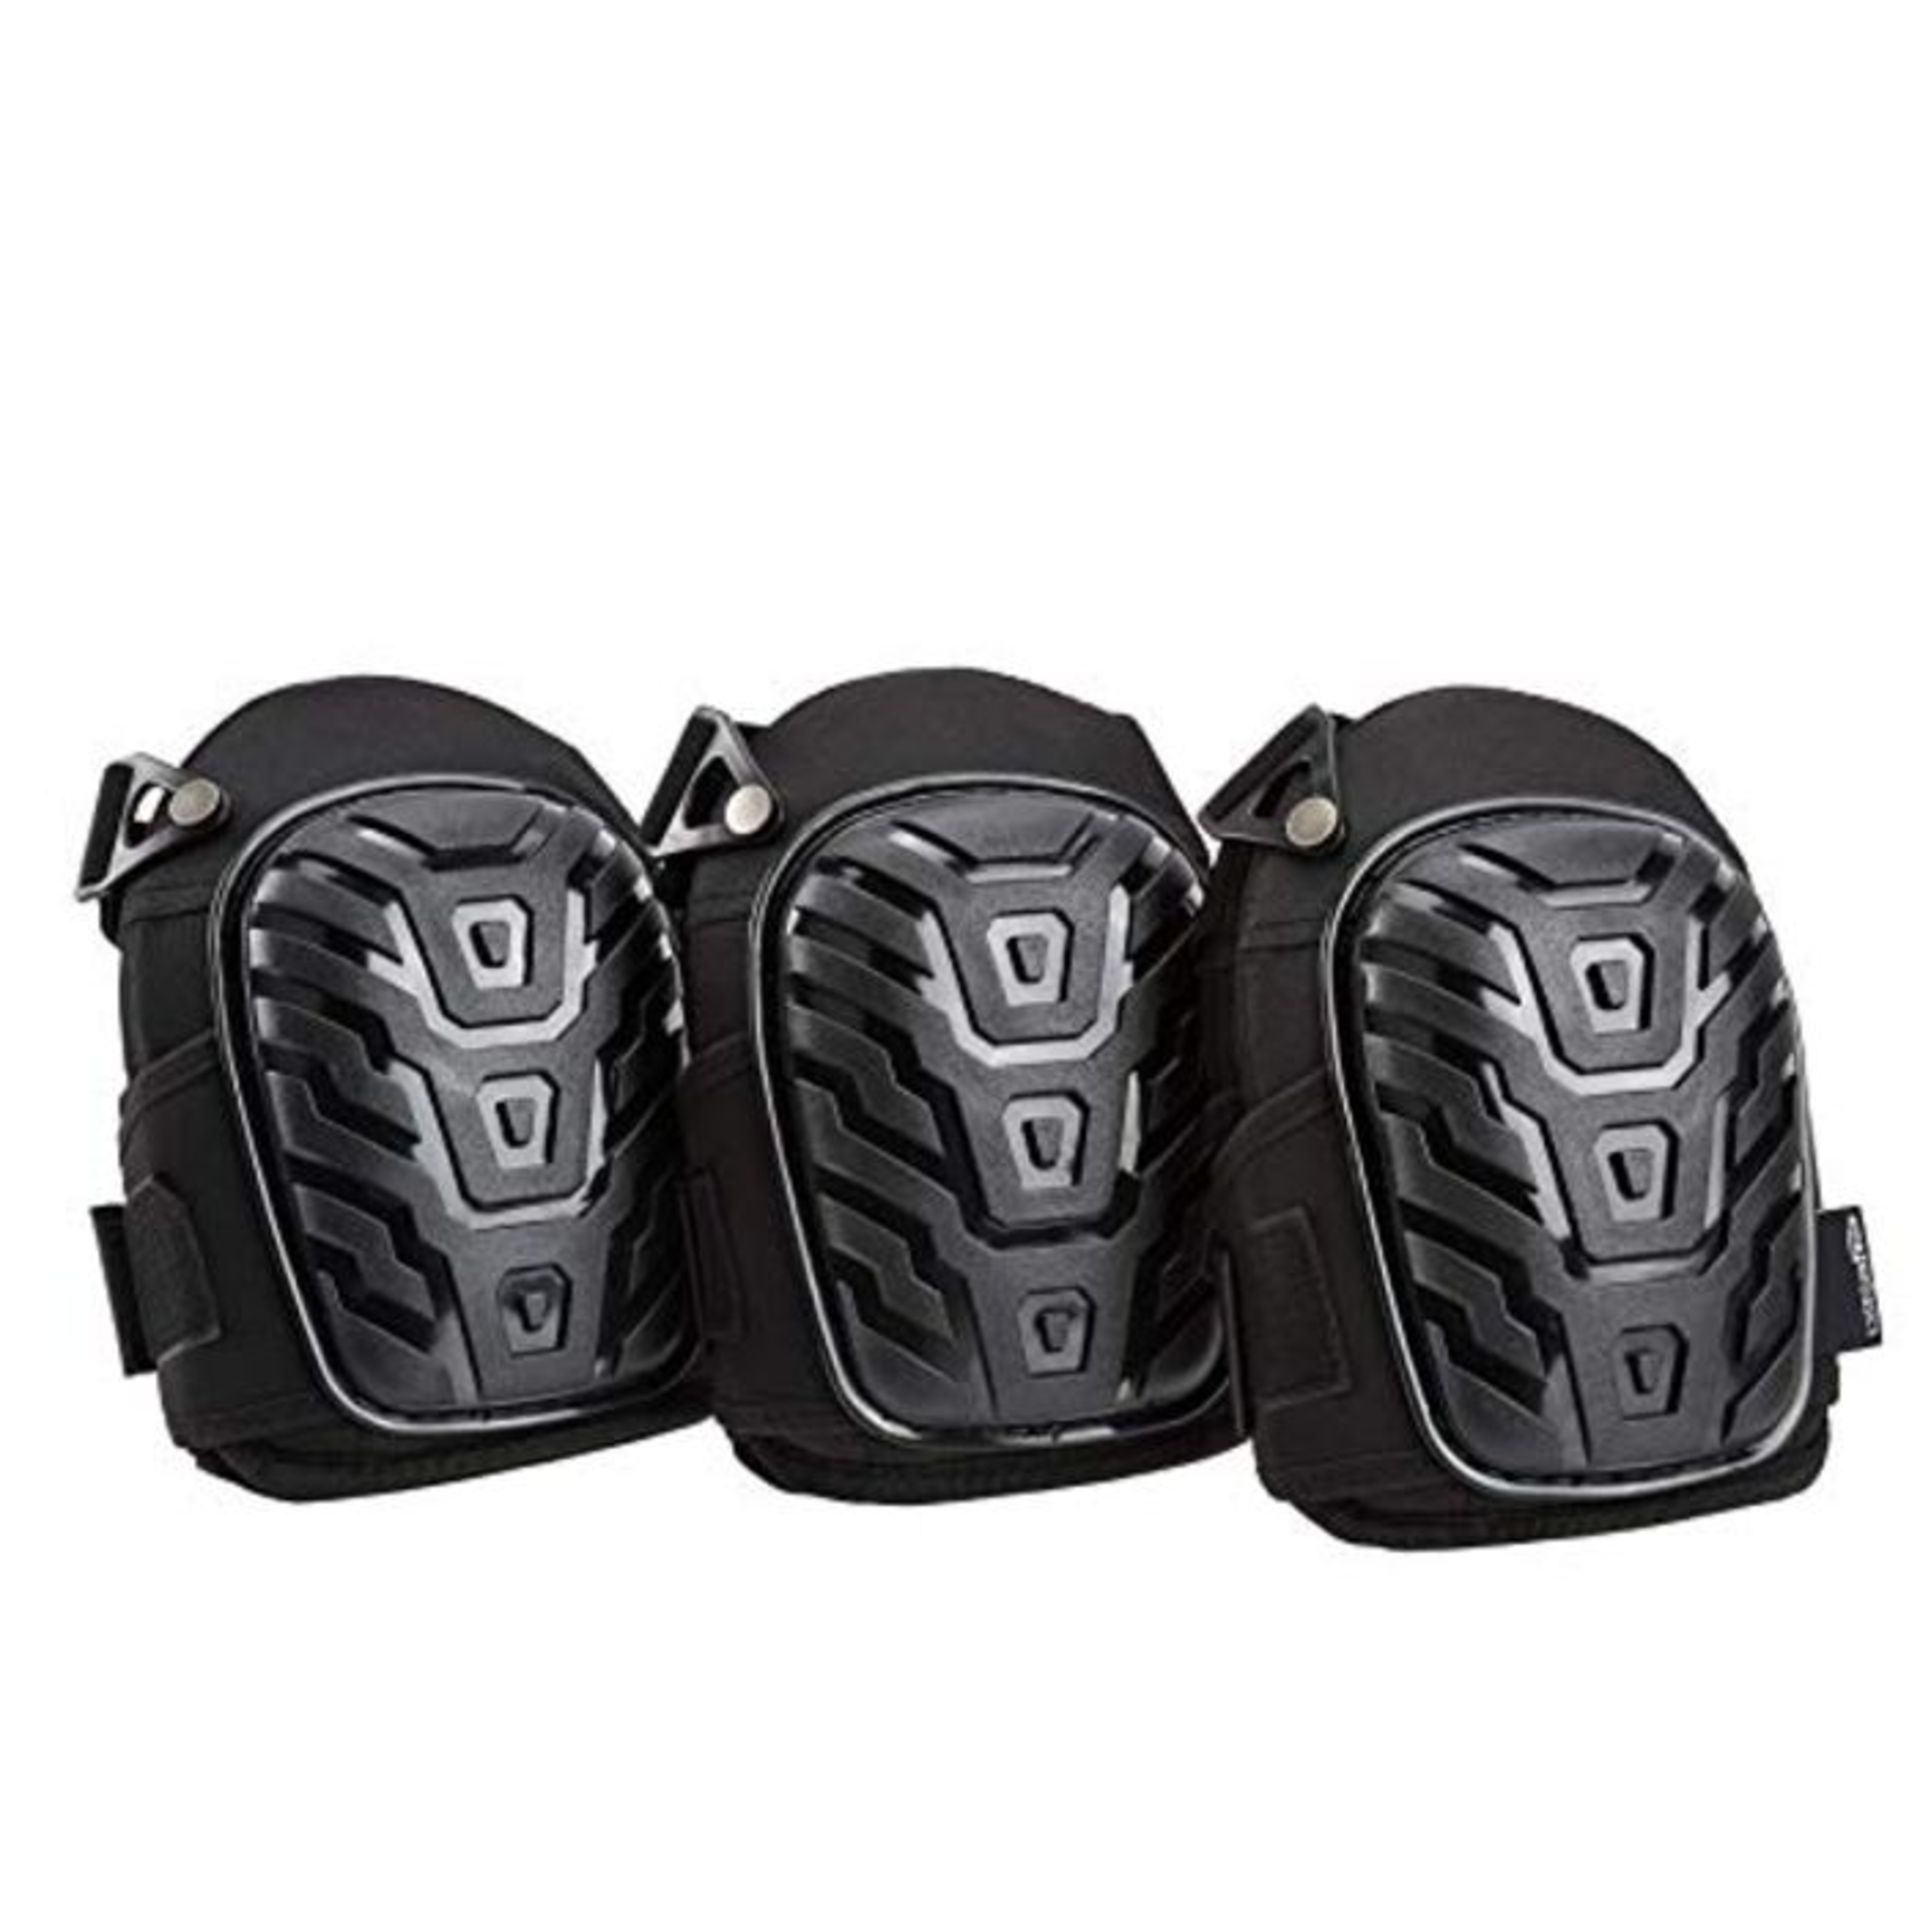 Amazon Basics Professional Knee Pads, Heavy Duty Foam Padding, Comfortable Gel Cushion